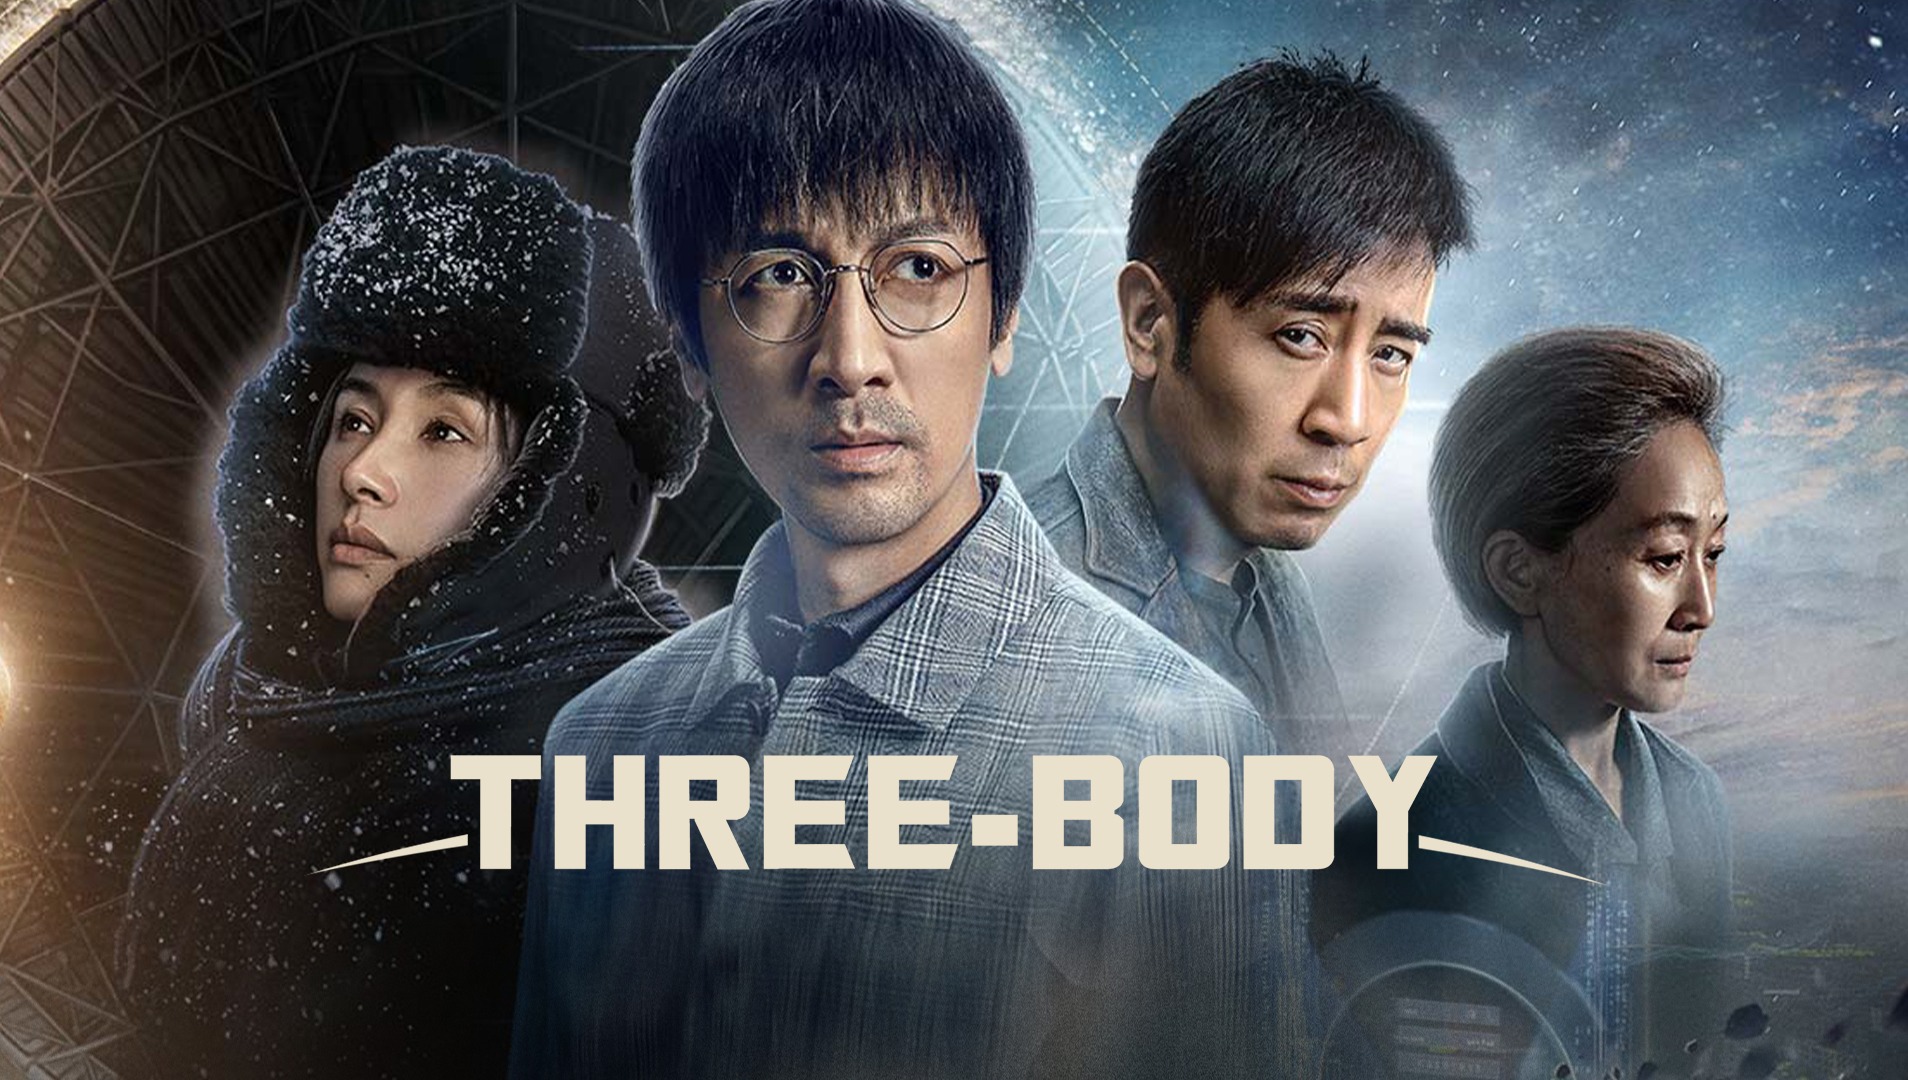 Netflix S01E01]]-3 Body Problem Season 1 Episode 1 Watch Online